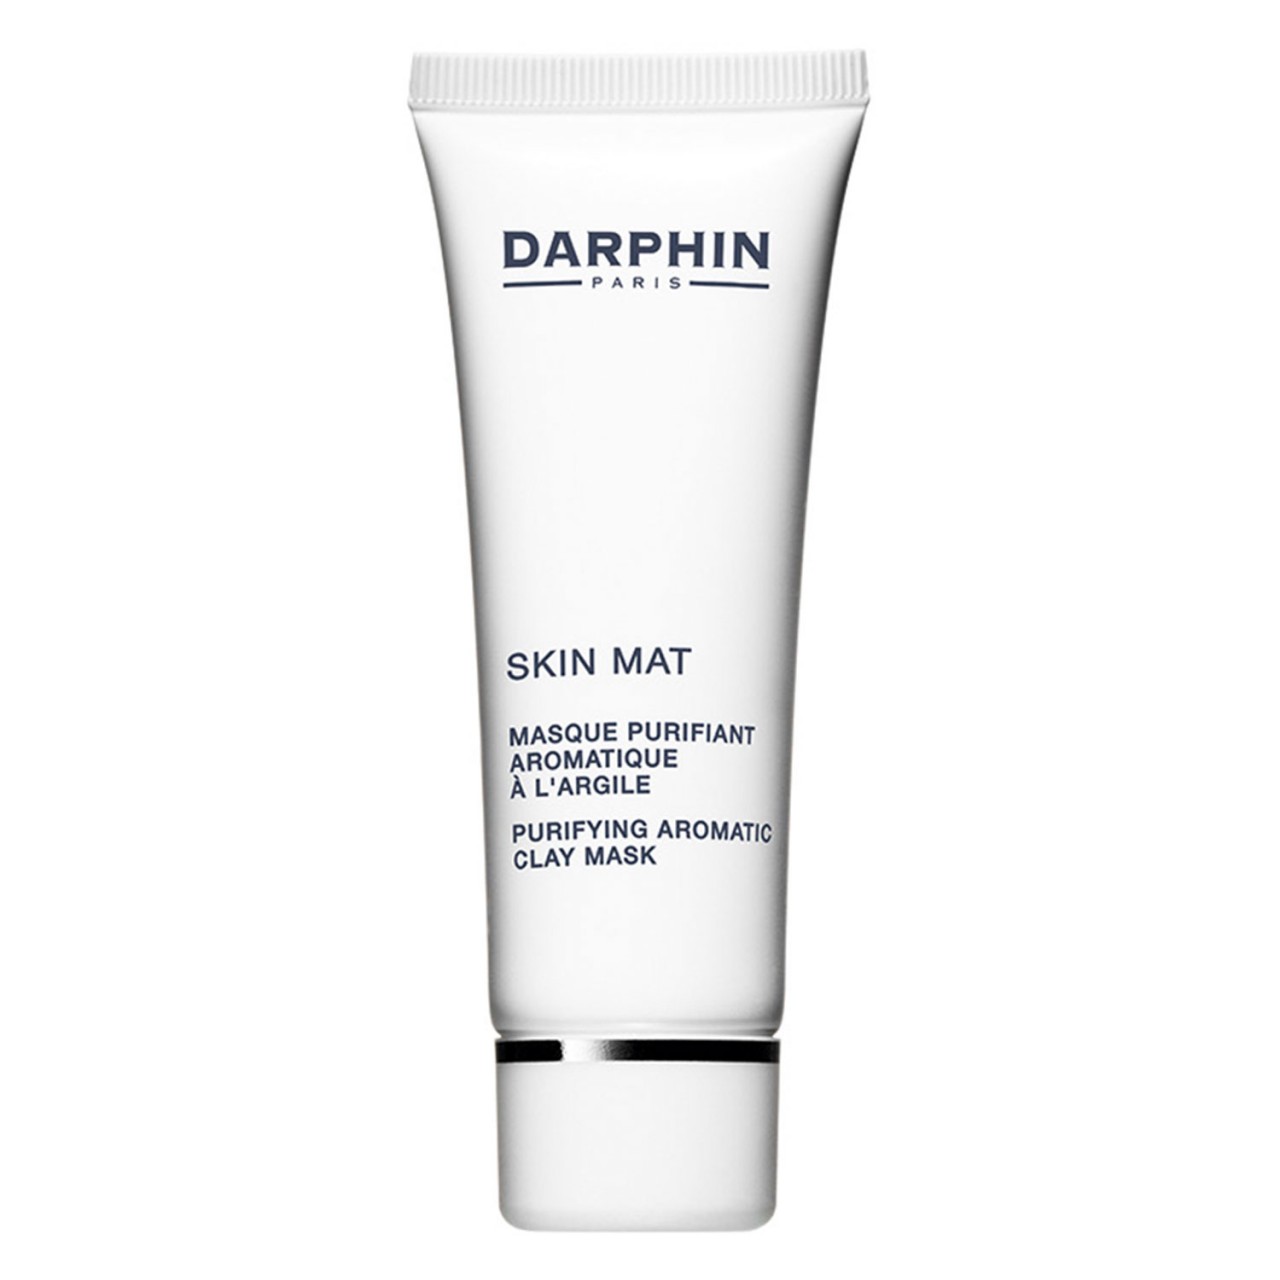 SKIN MAT - Purifying Aromatic Clay Mask von Darphin